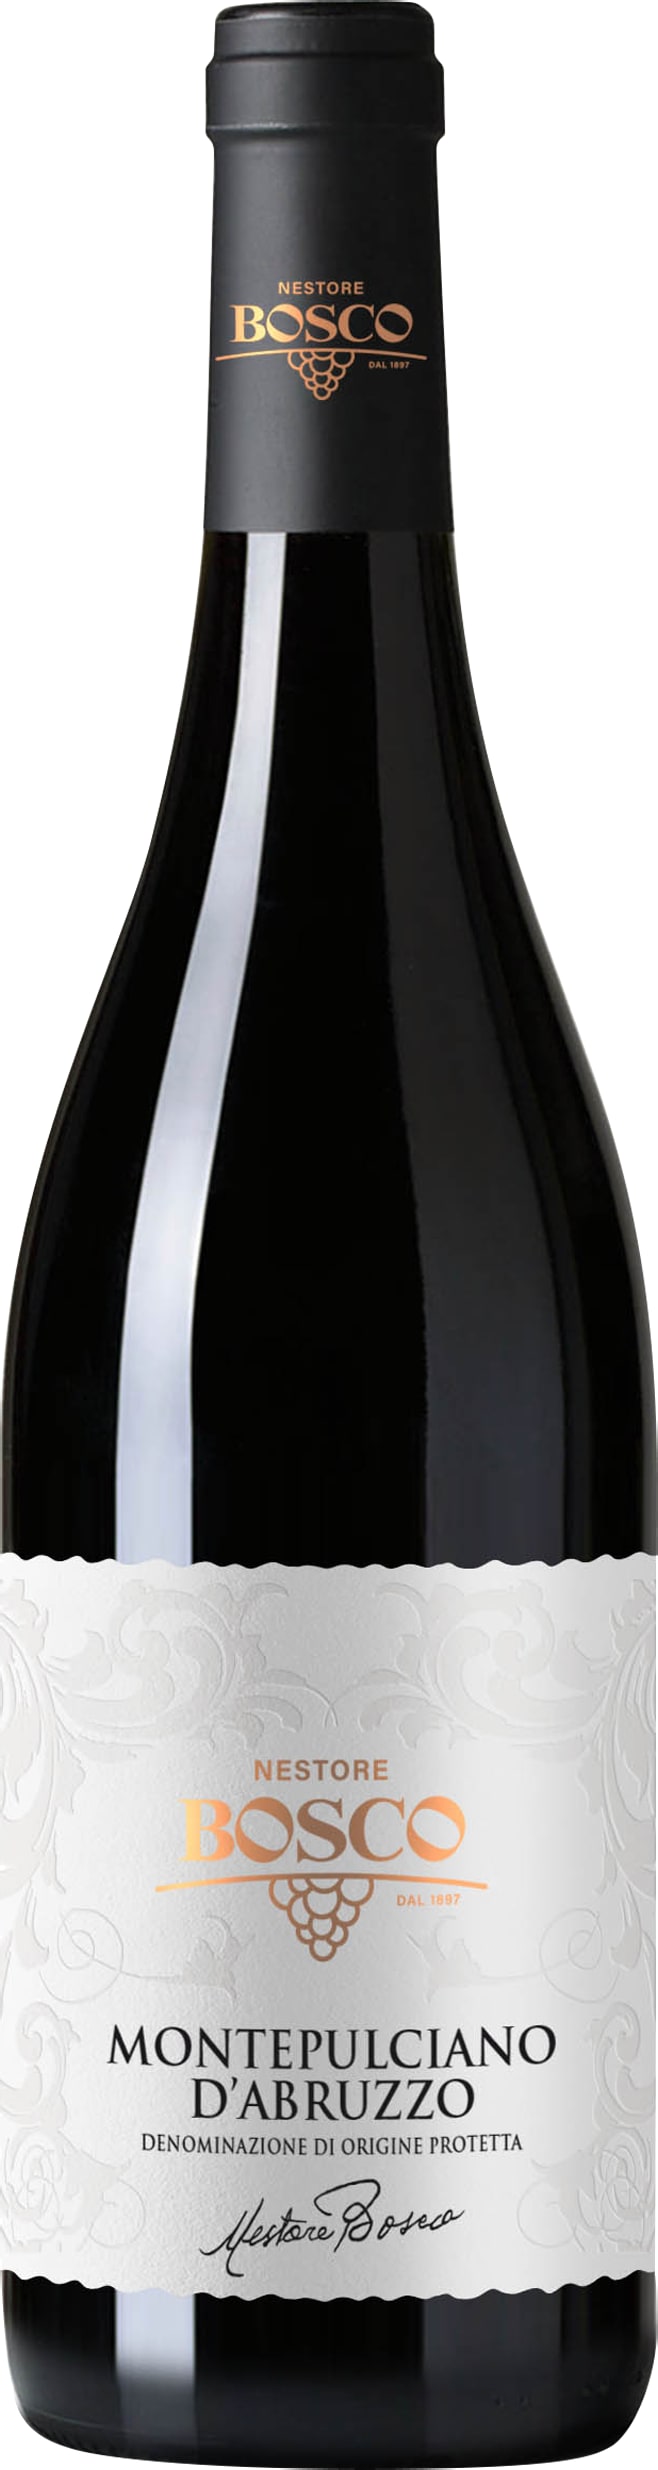 Bosco Nestore Montepulciano d'Abruzzo DOC 2020 75cl - Buy Bosco Nestore Wines from GREAT WINES DIRECT wine shop